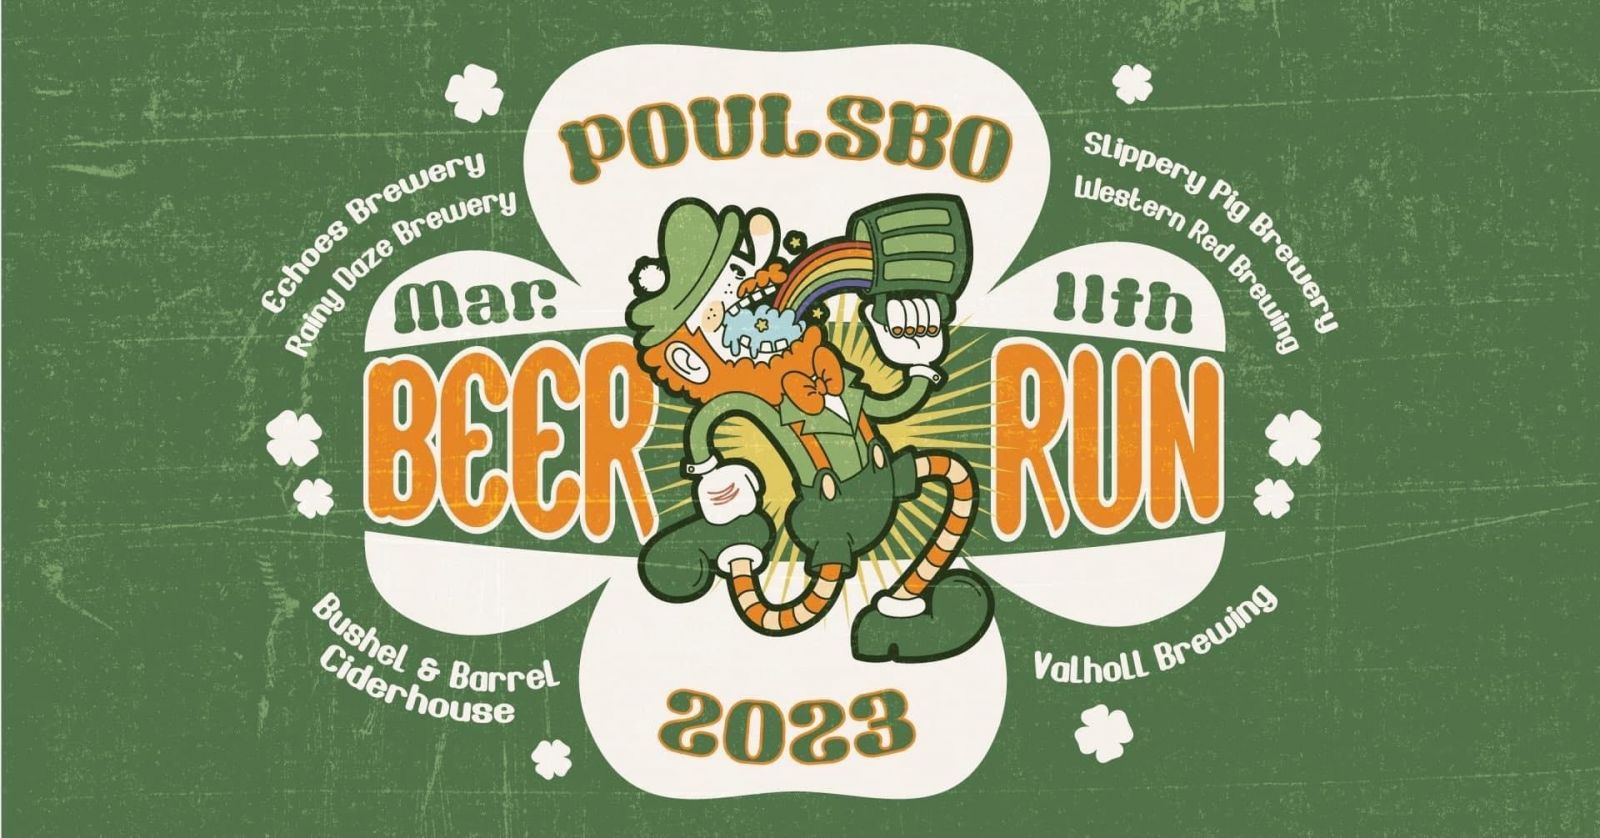 Poulsbo Beer Run (St. Patrick's Day)